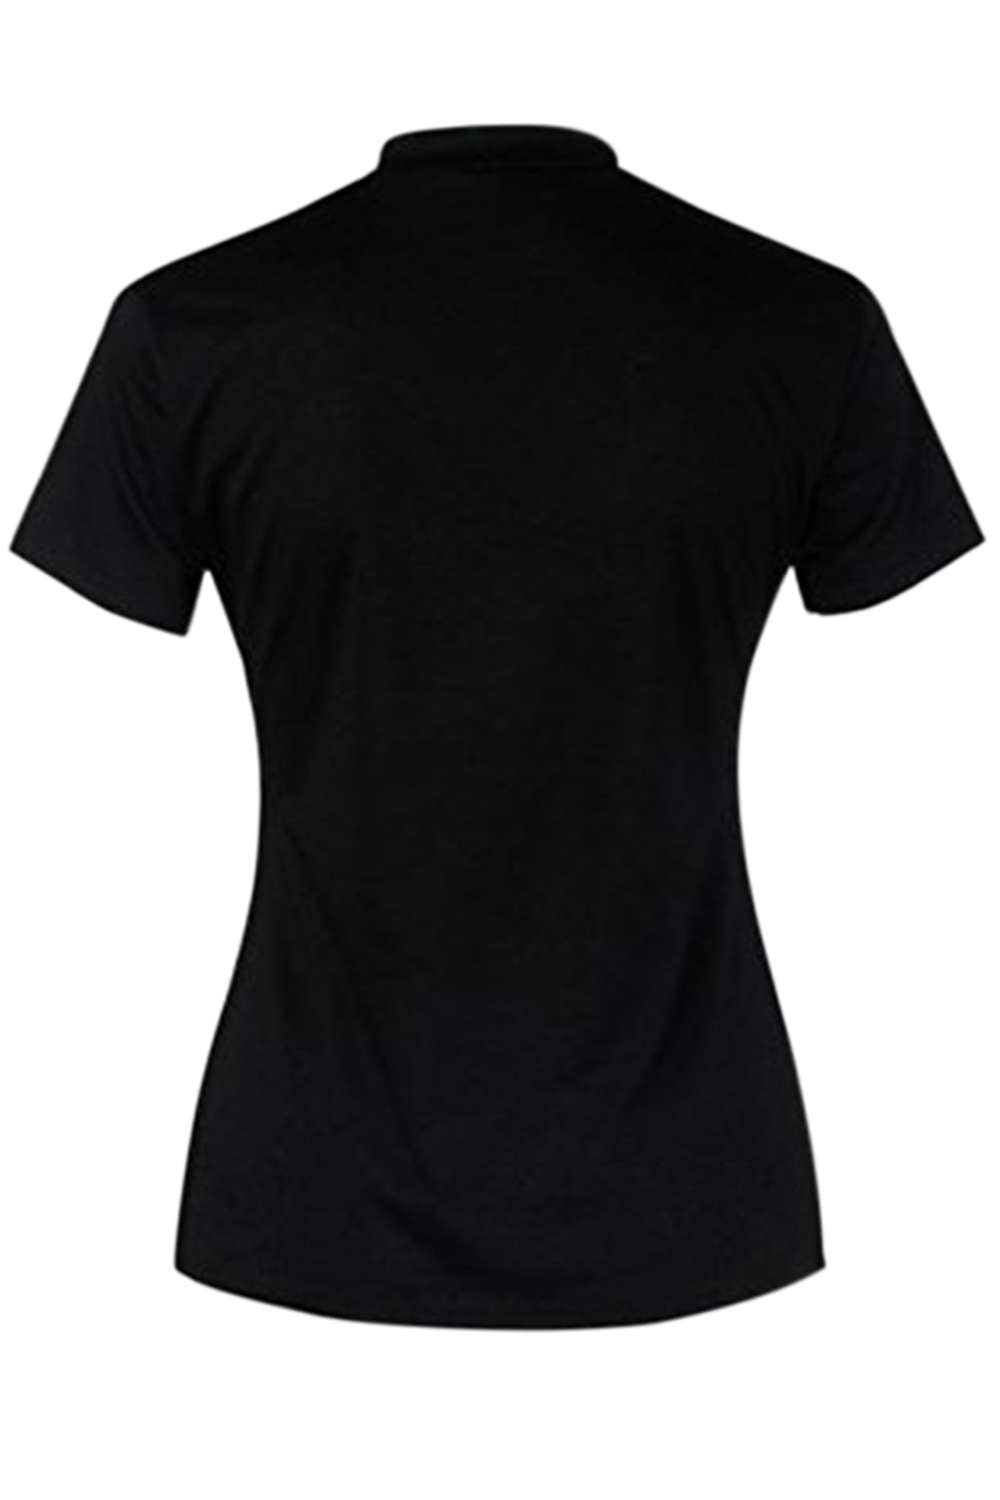 Iyasson Embroidery Mesh Splicing Short Sleeve T-Shirt